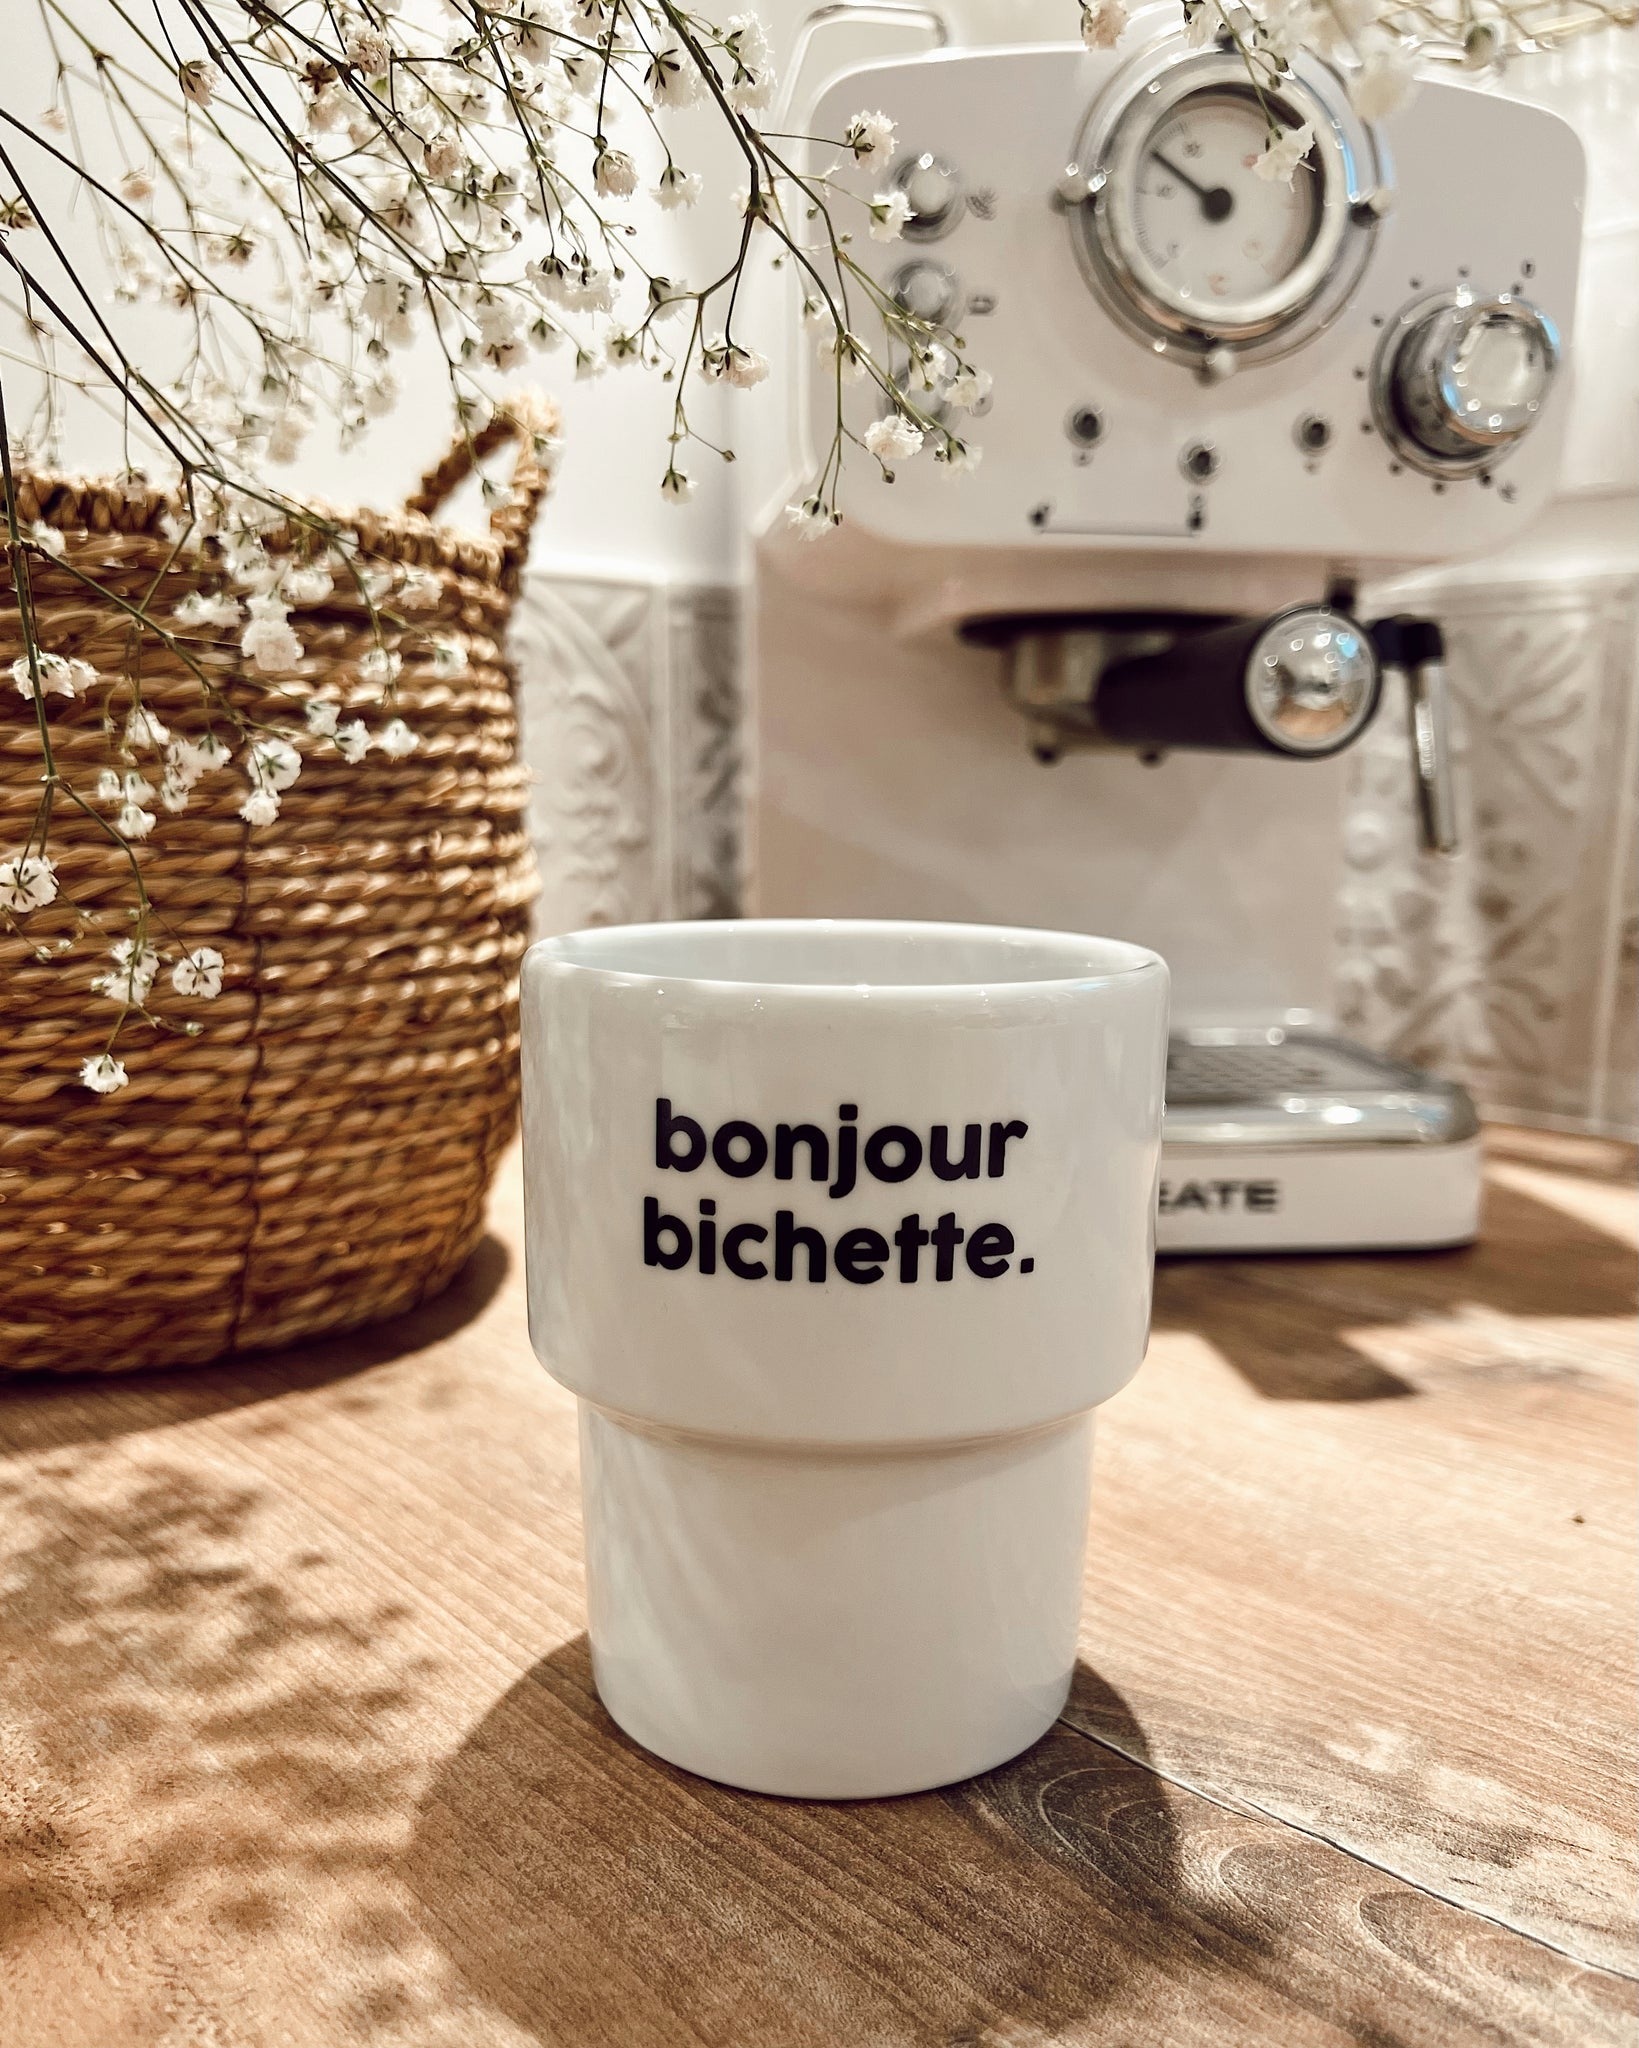 FÉLICIE AUSSI - Bonjour bichette - Mug